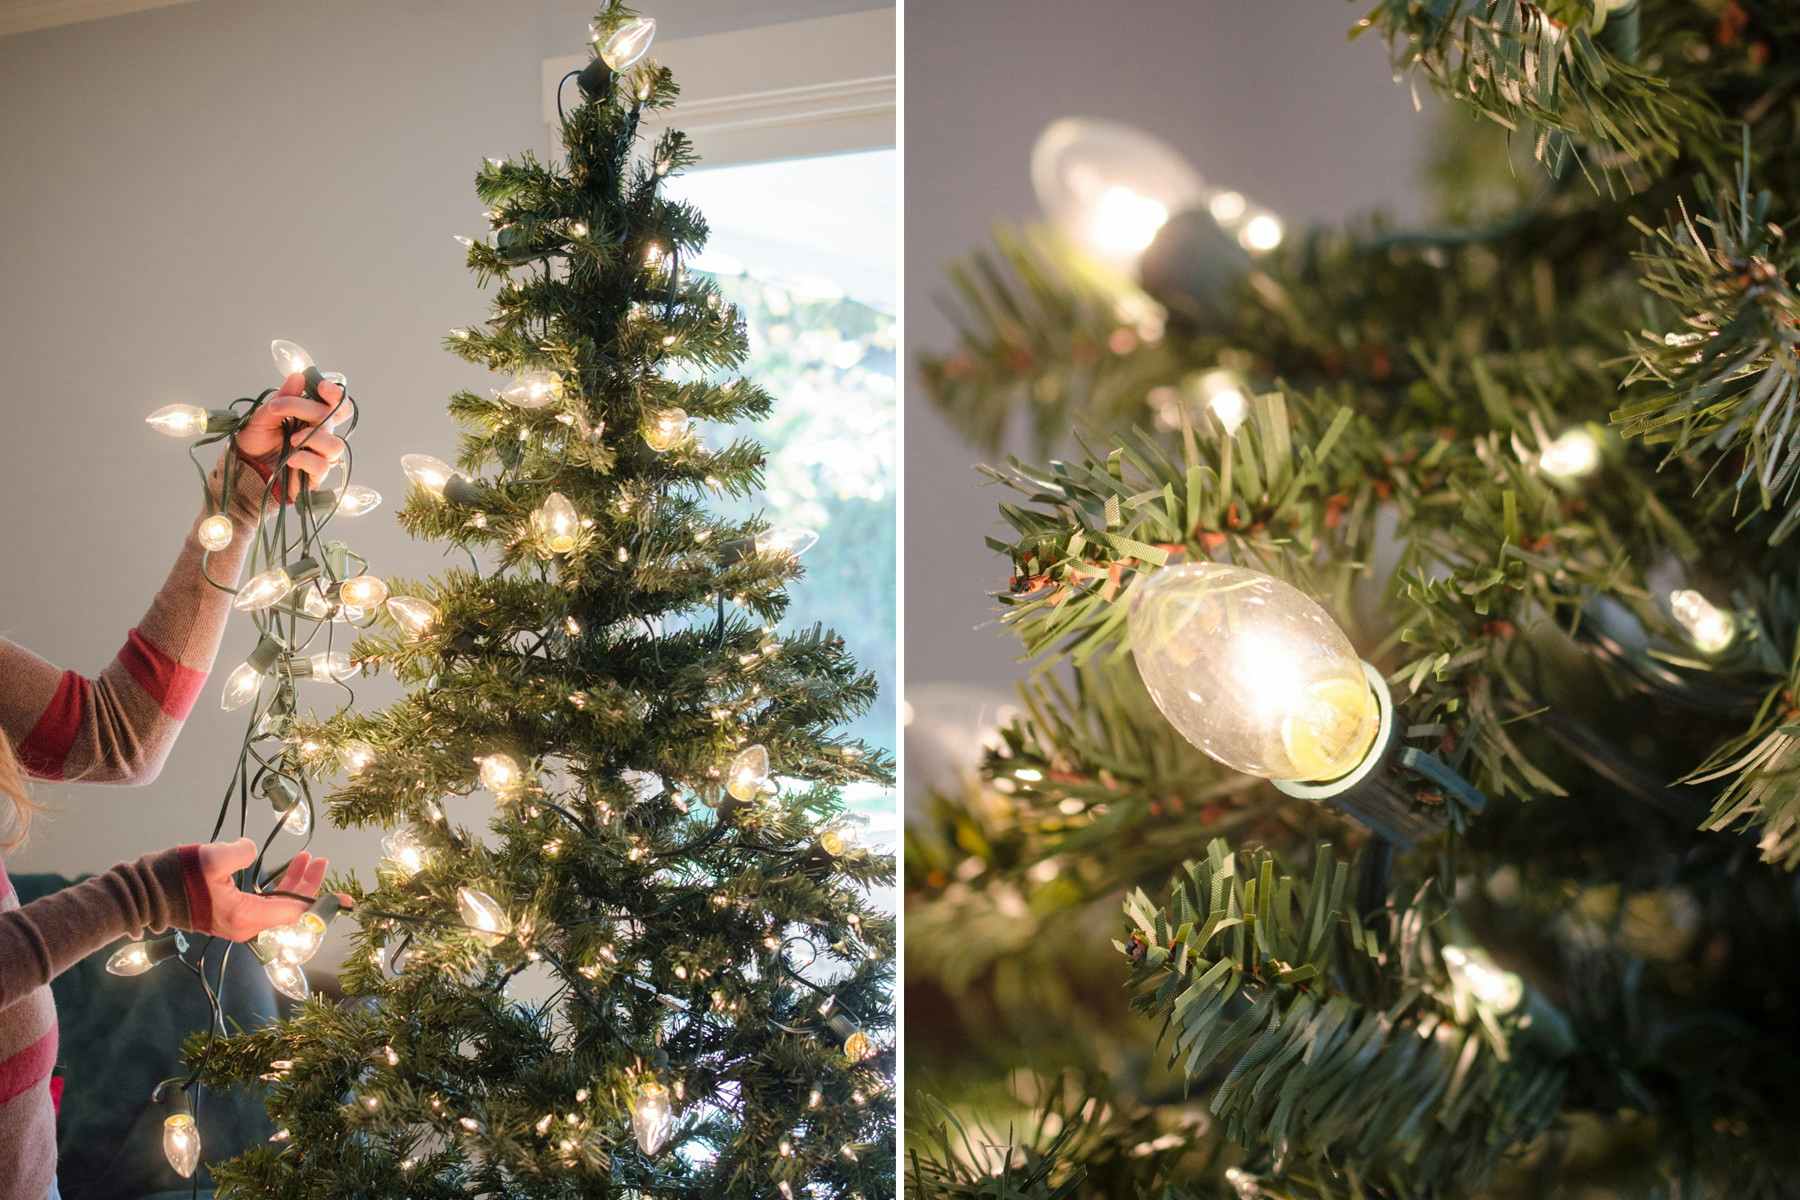 c9 Christmas light bulbs being added to a Christmas tree.